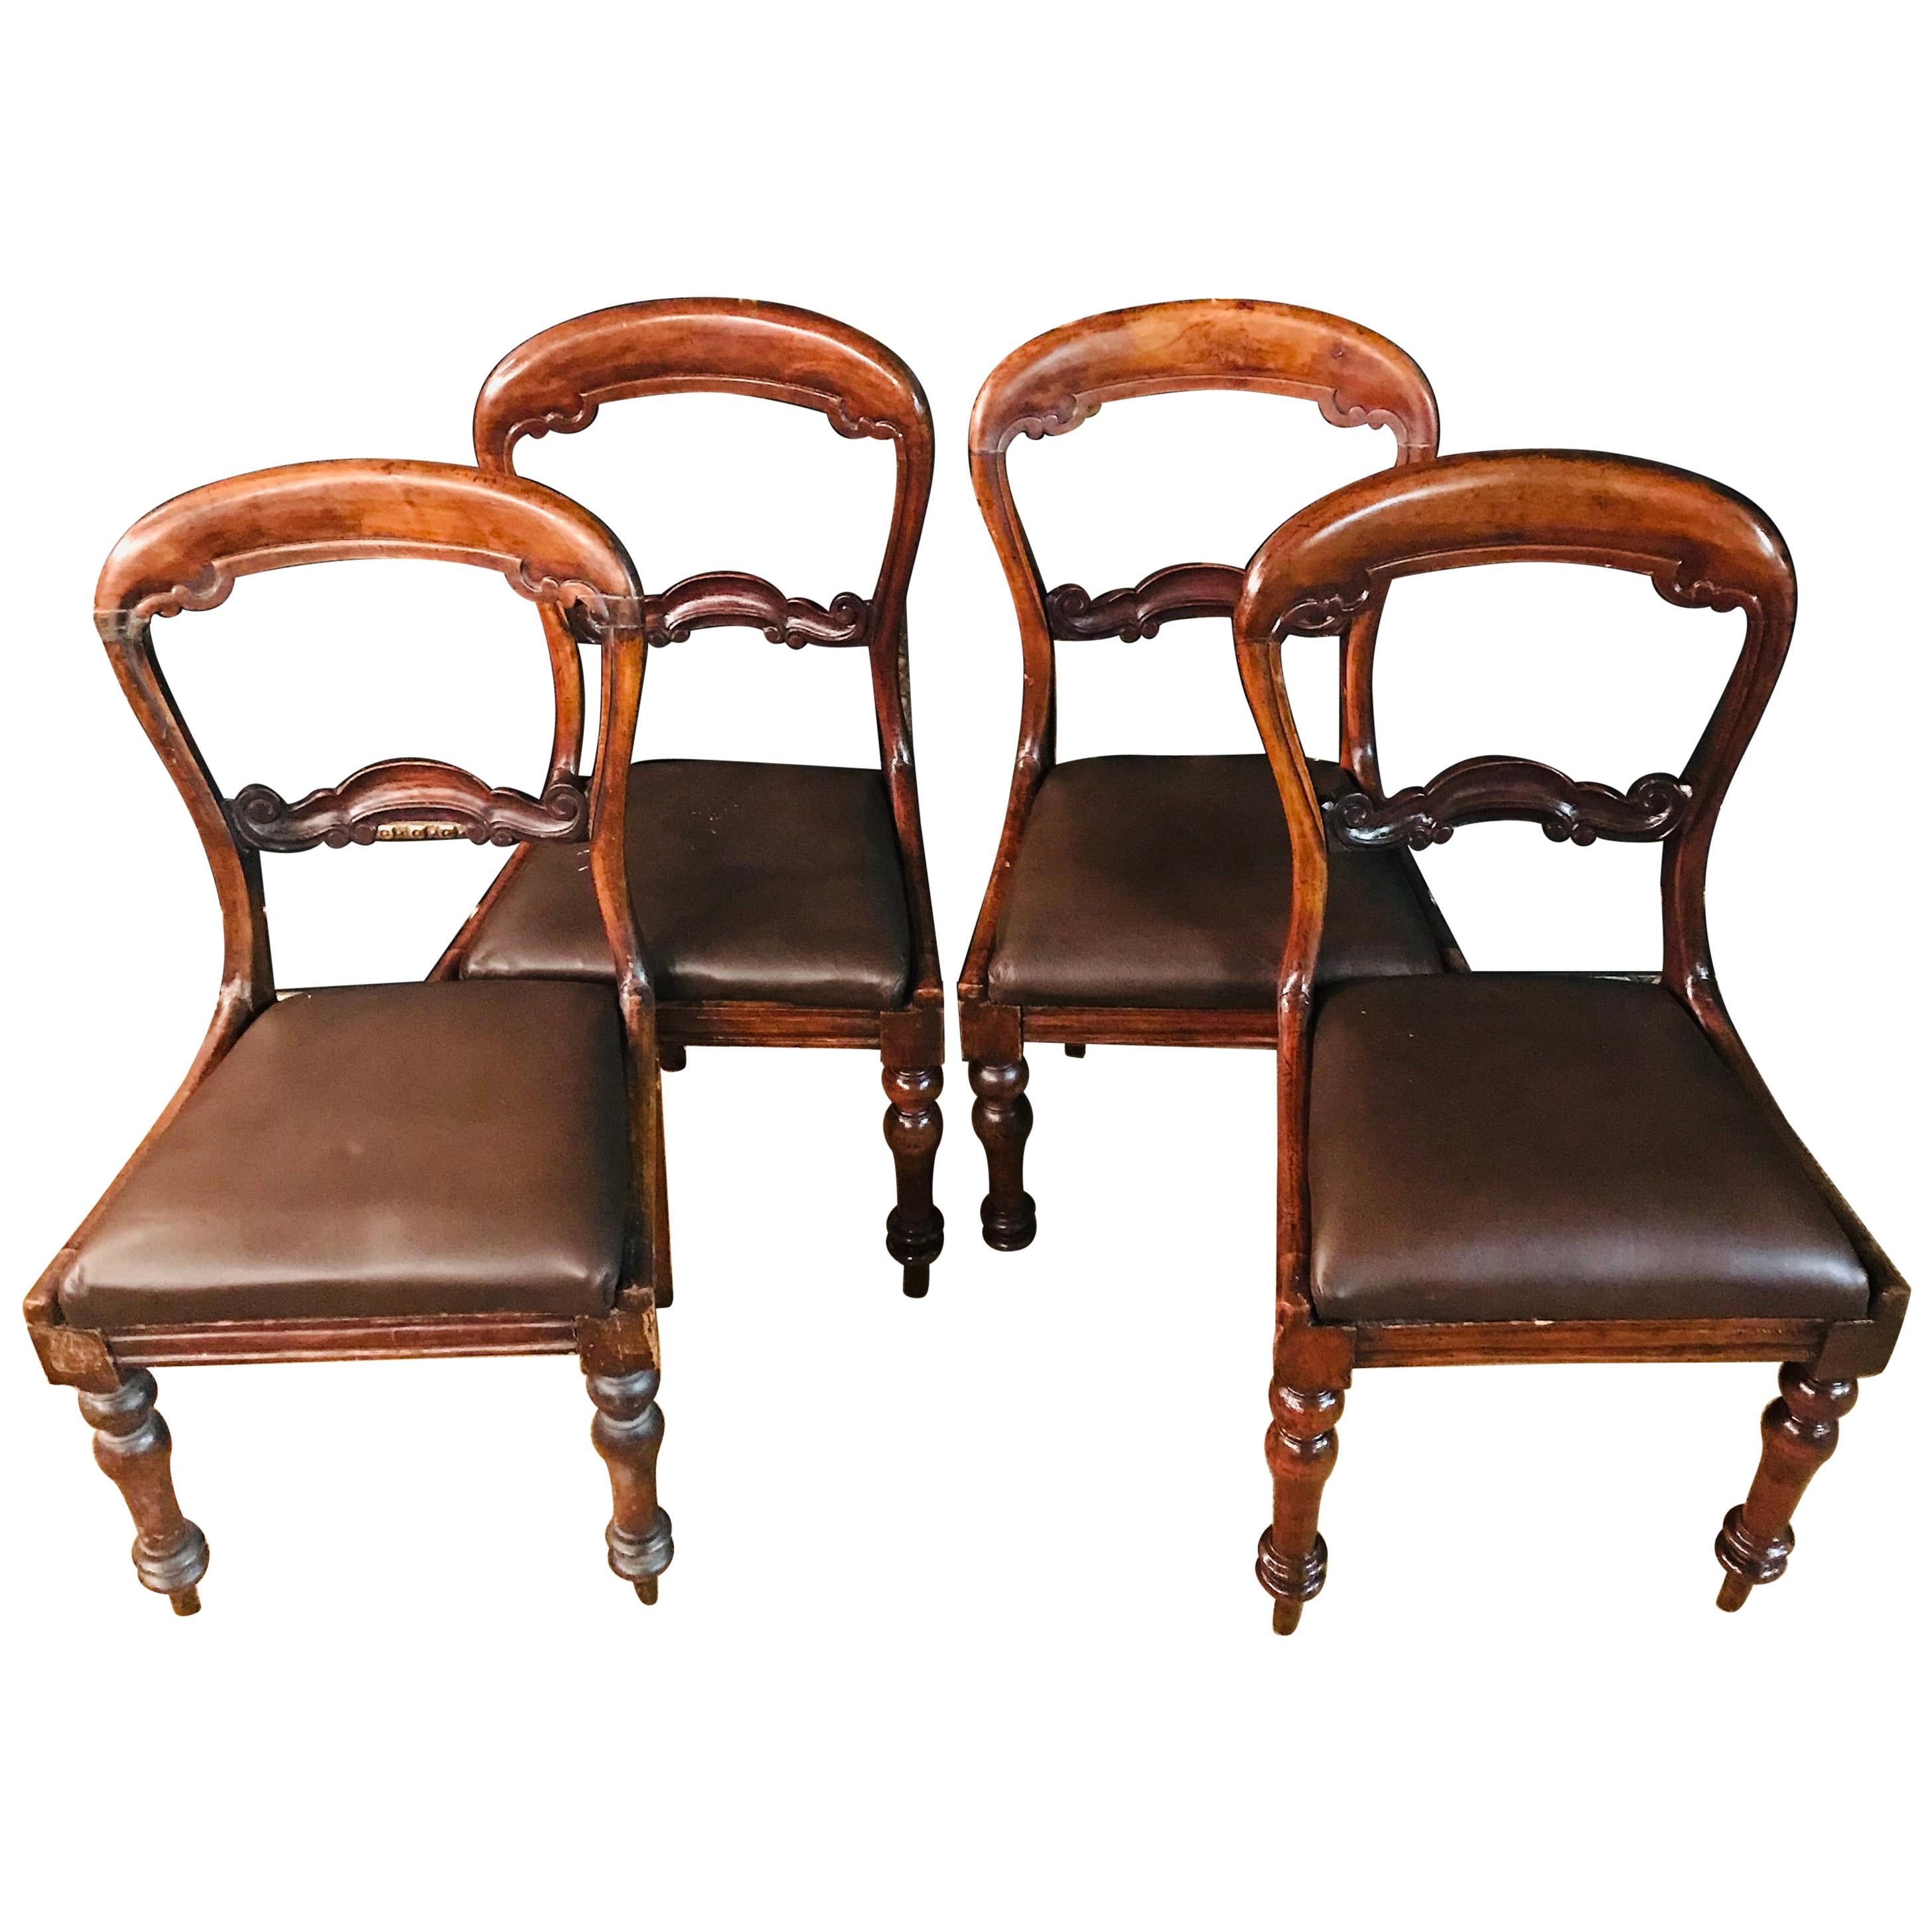 4 Original antique Biedermeier Chairs Solid Mahogany, circa 1840